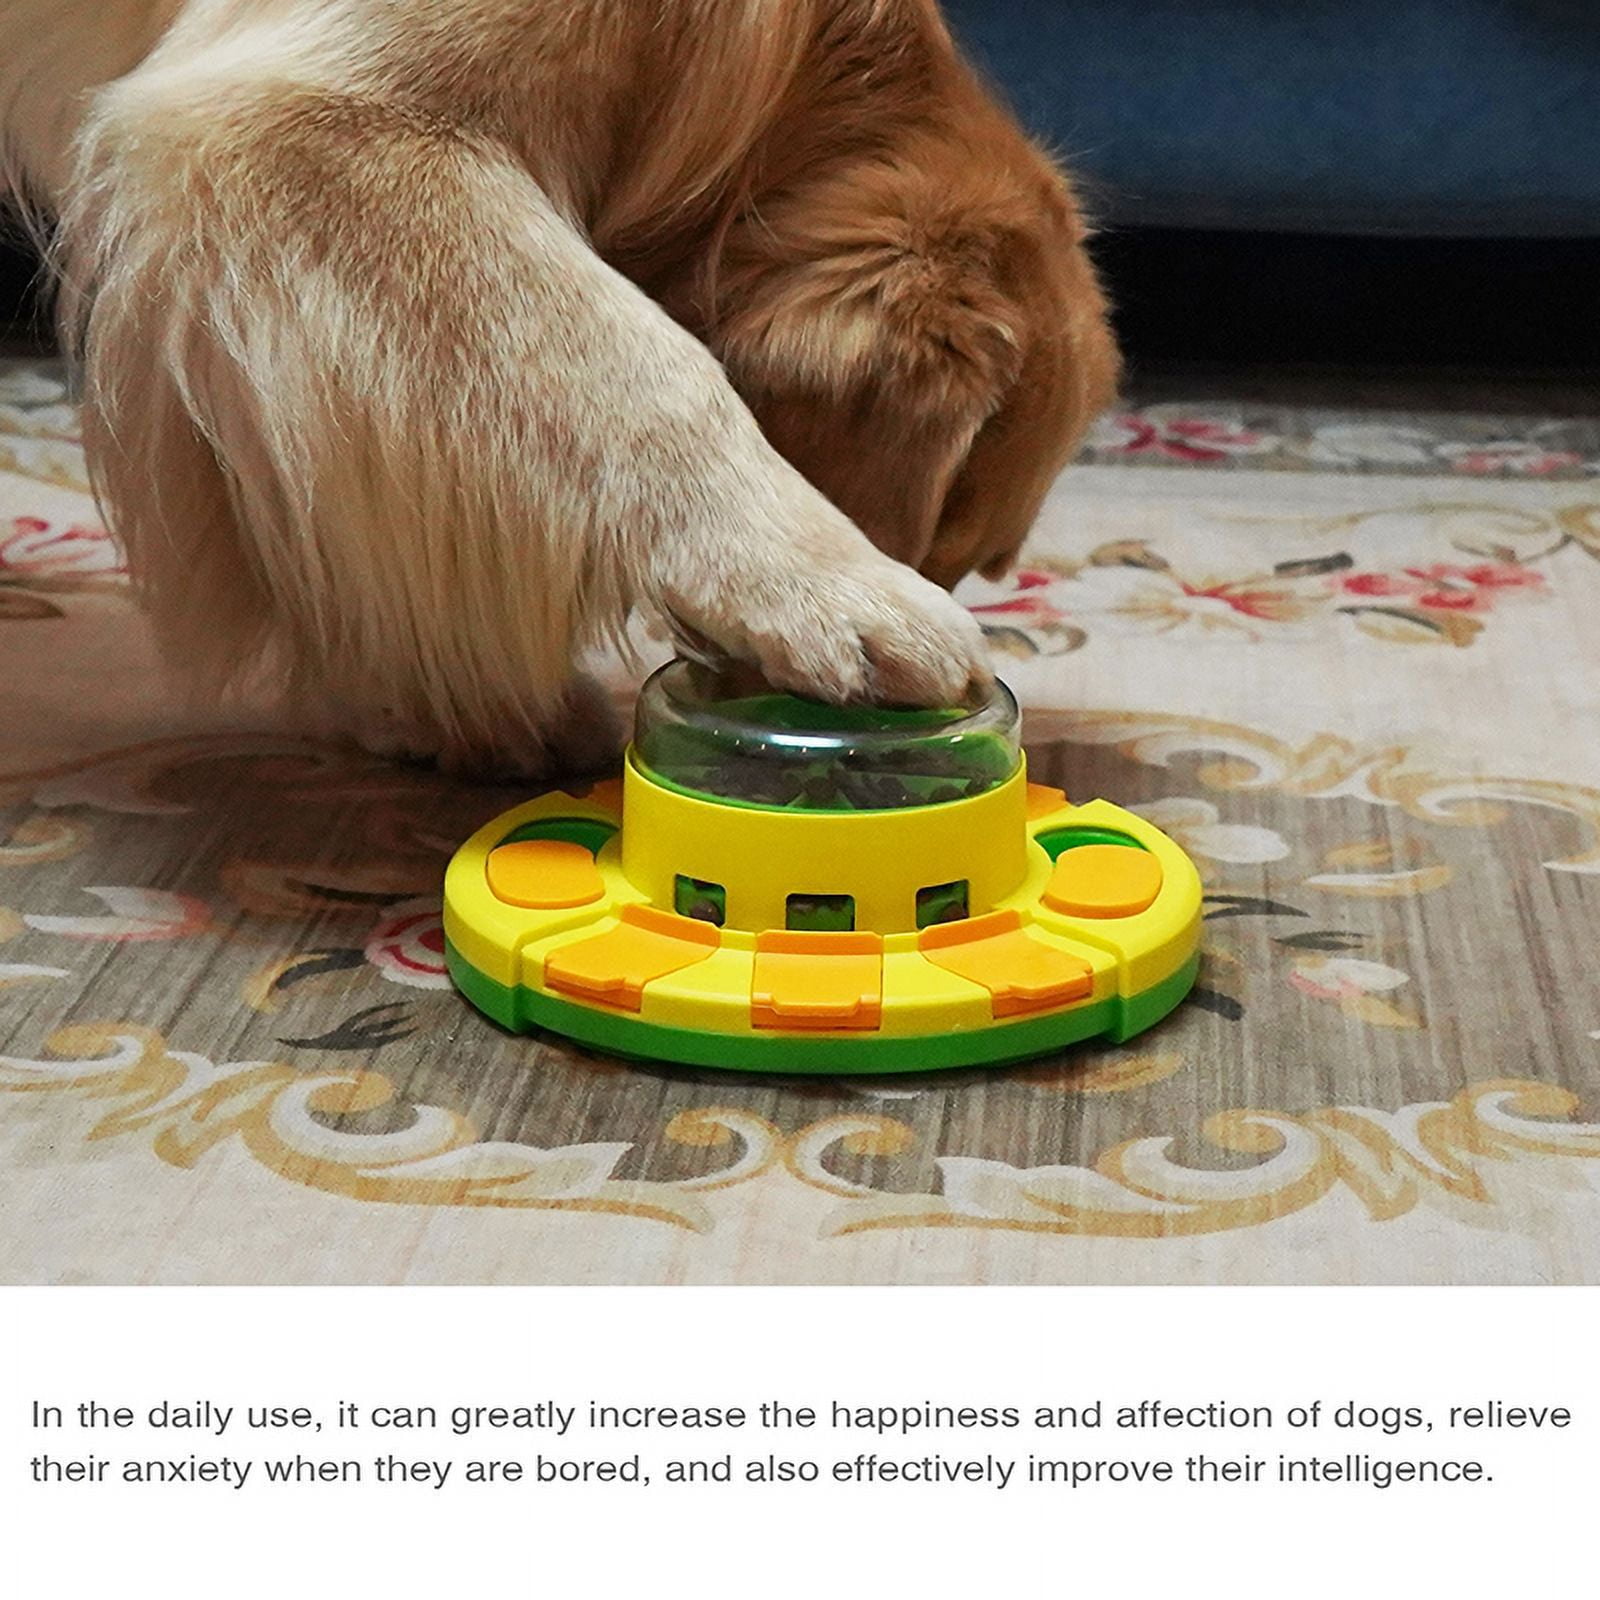 Wisdom Toy Slow Dispensing Pet Feeder Bowl - Inspire Uplift